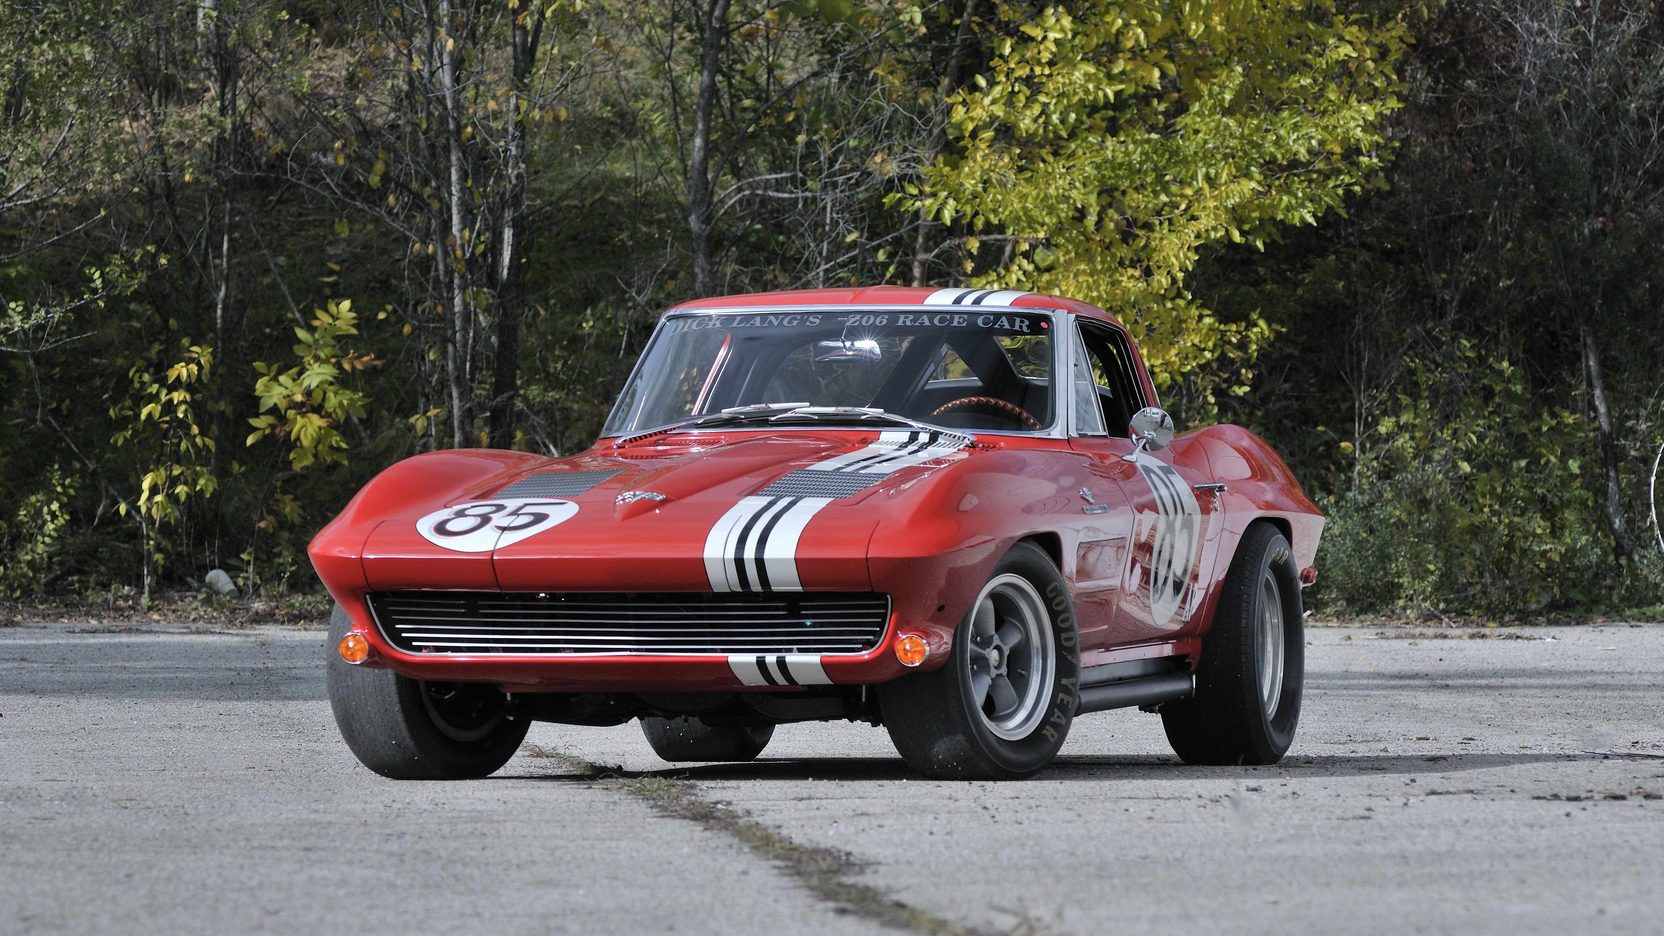 1963 Corvette C2 Z-06 race car, owned by Dick Lang